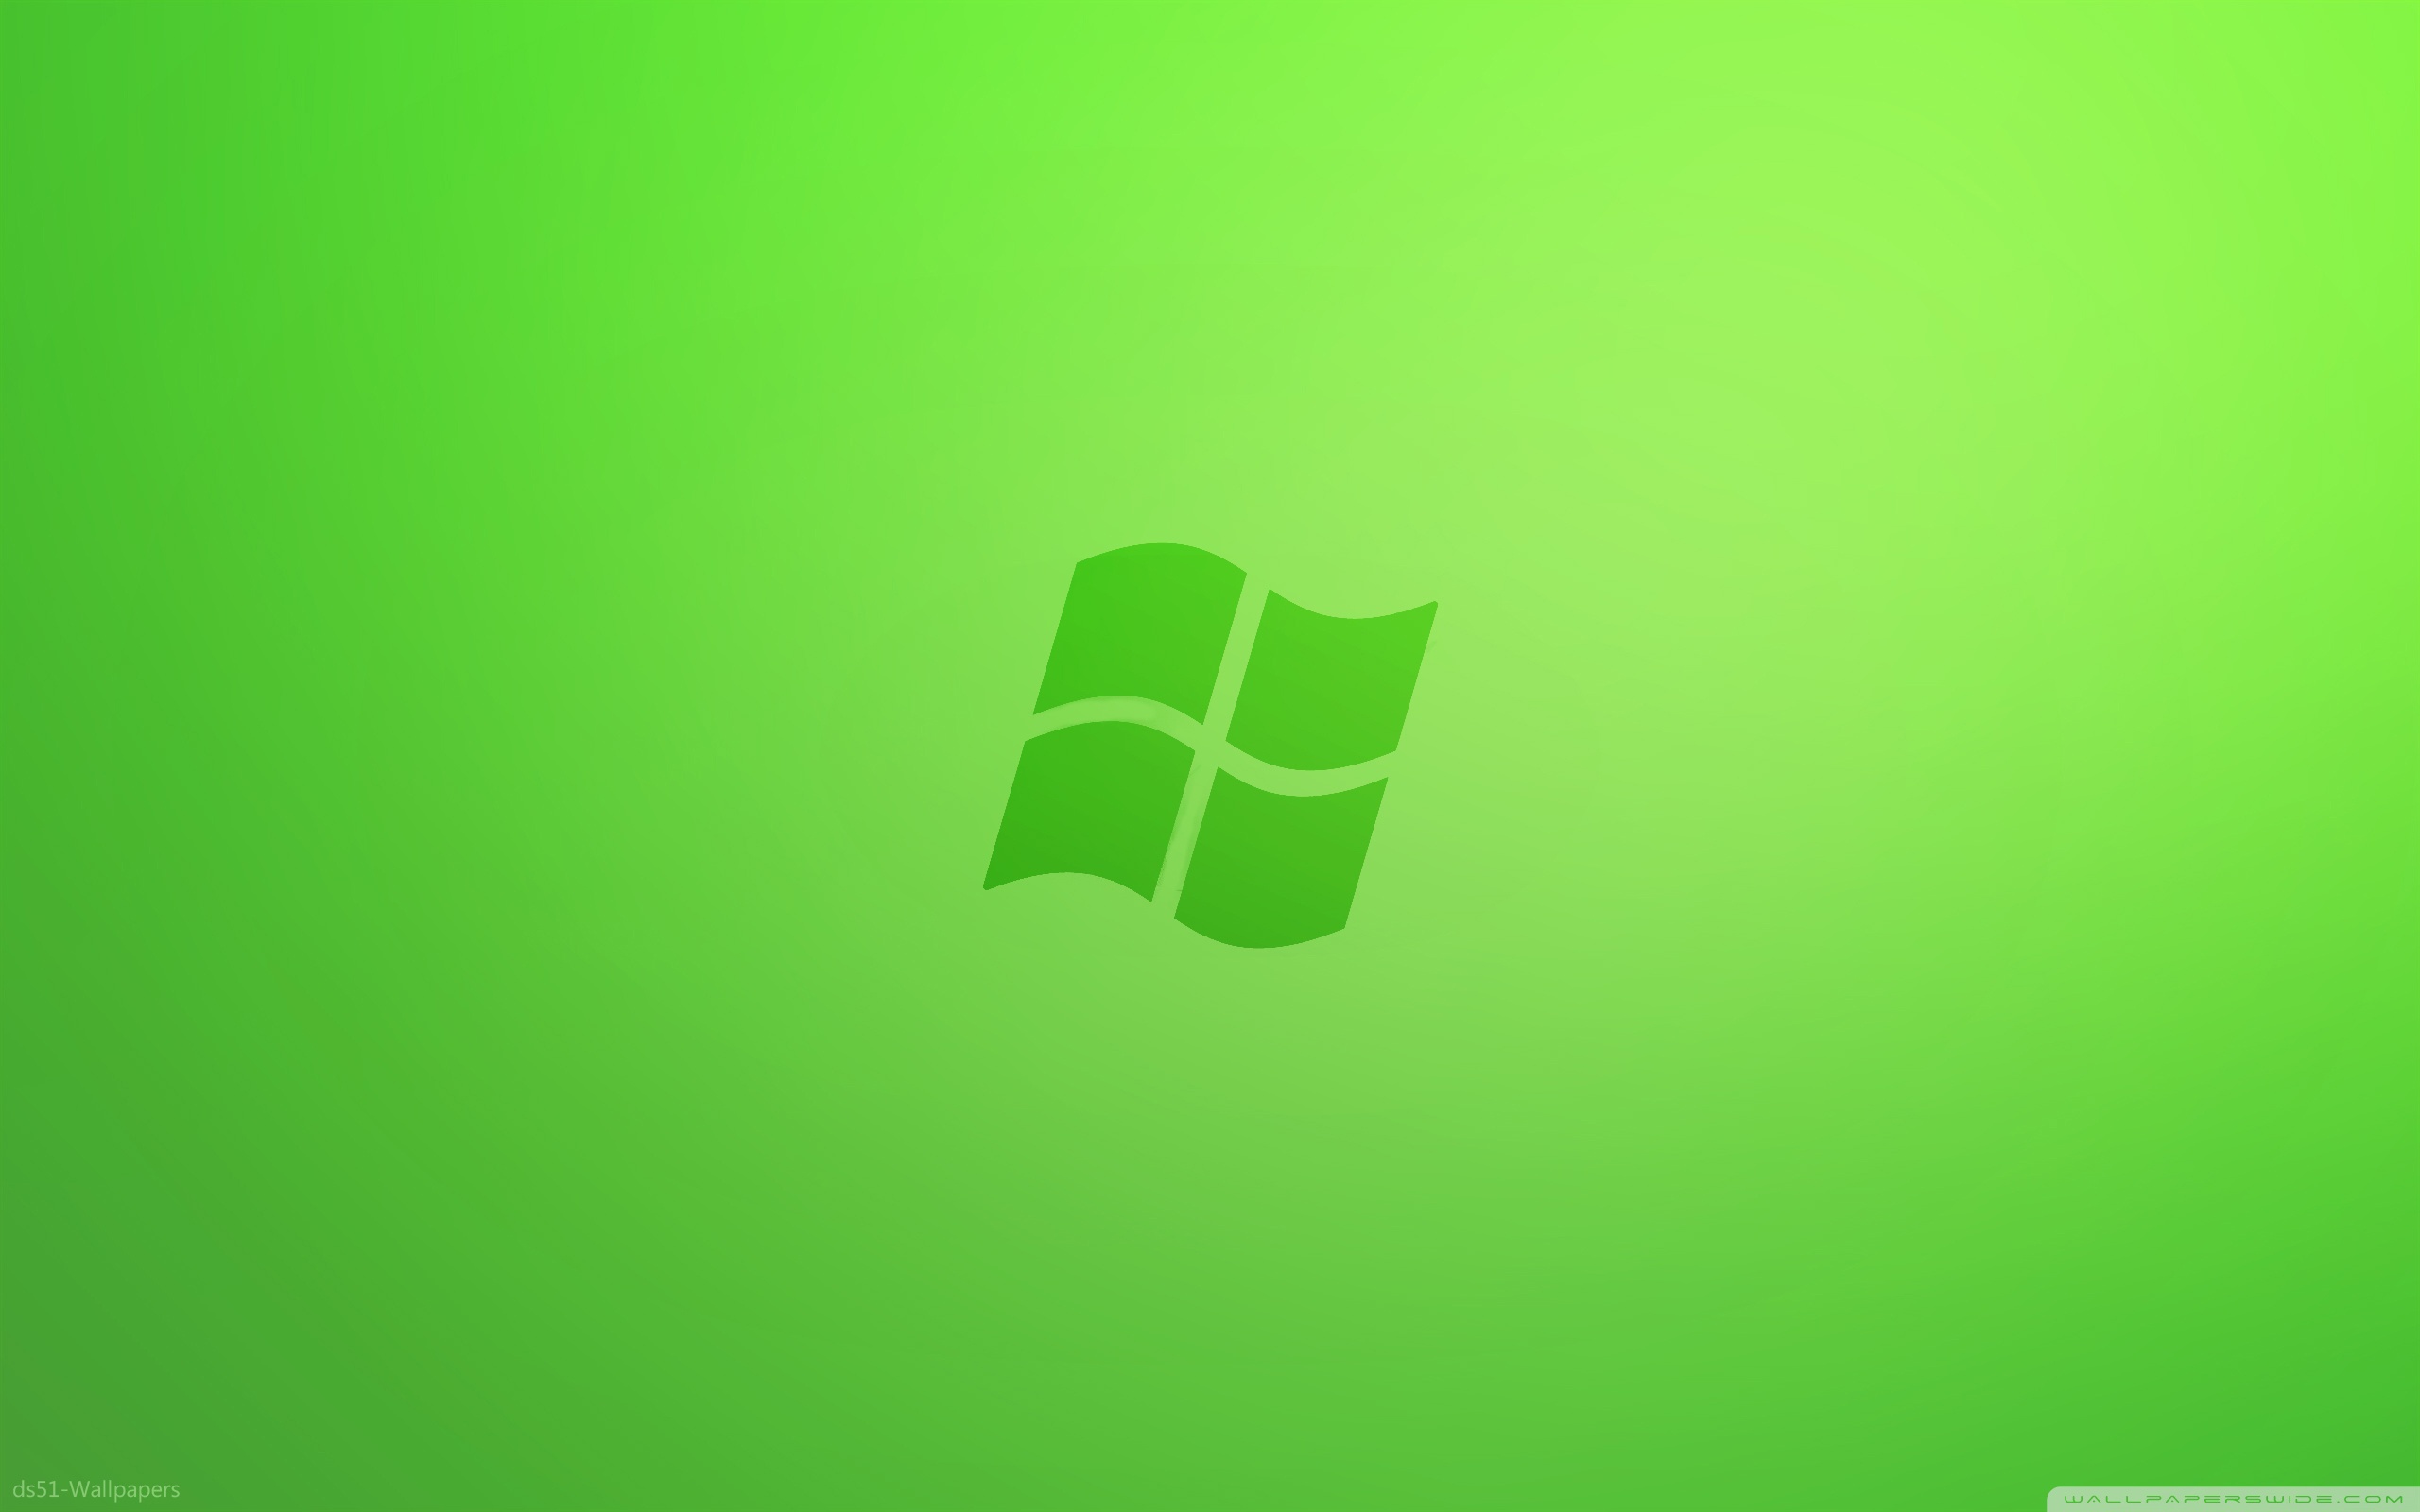 Windows 7 Green Wallpaper 4k - 2560x1600 Wallpaper 